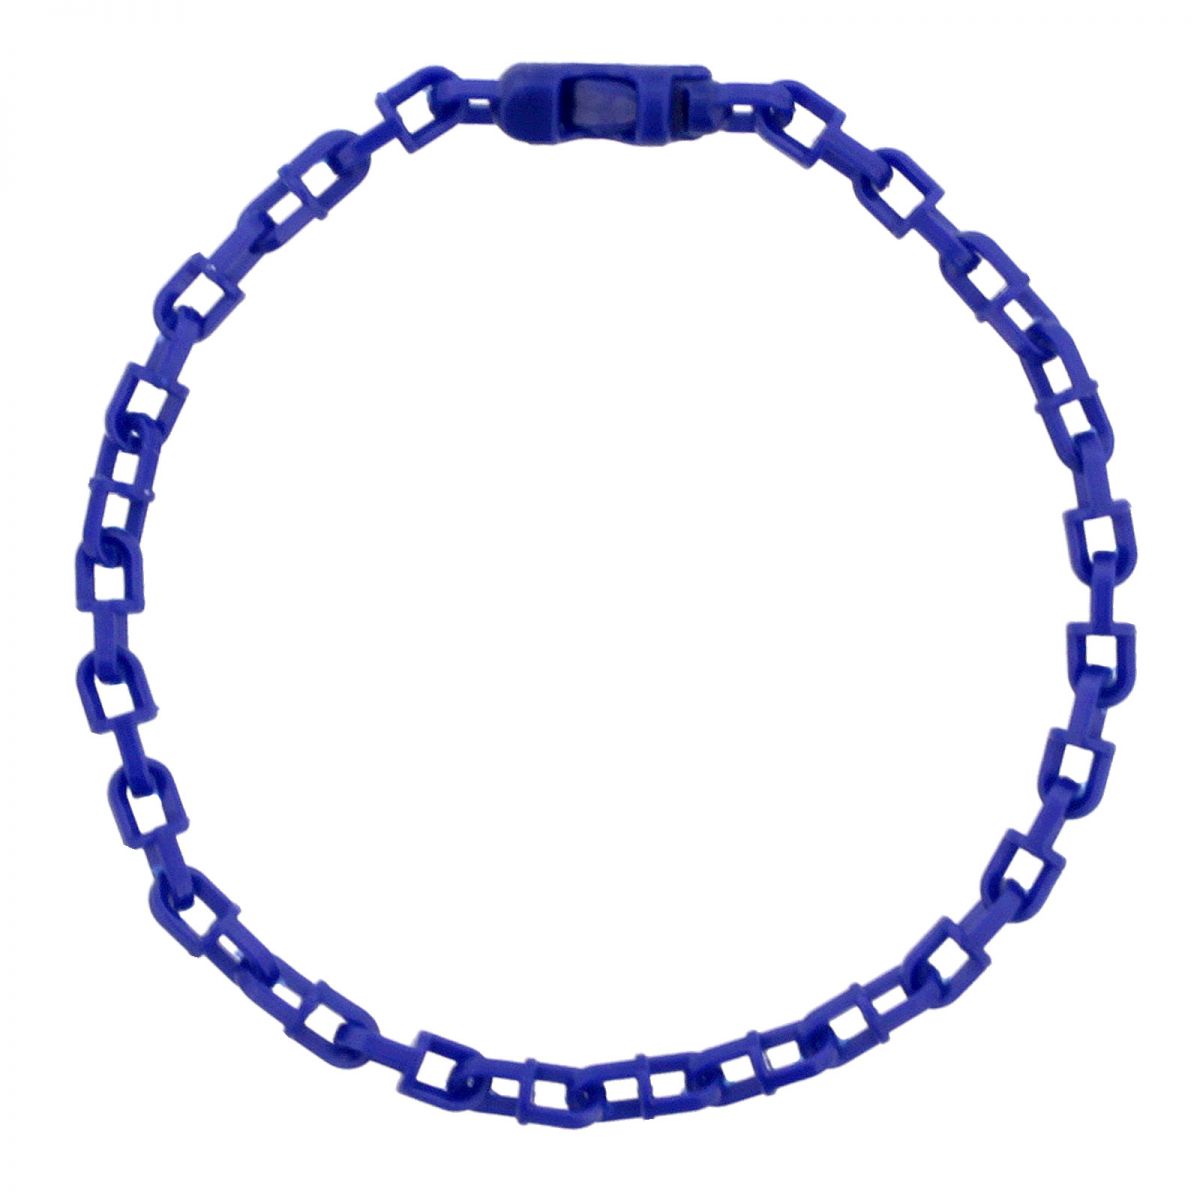 Plastic chain